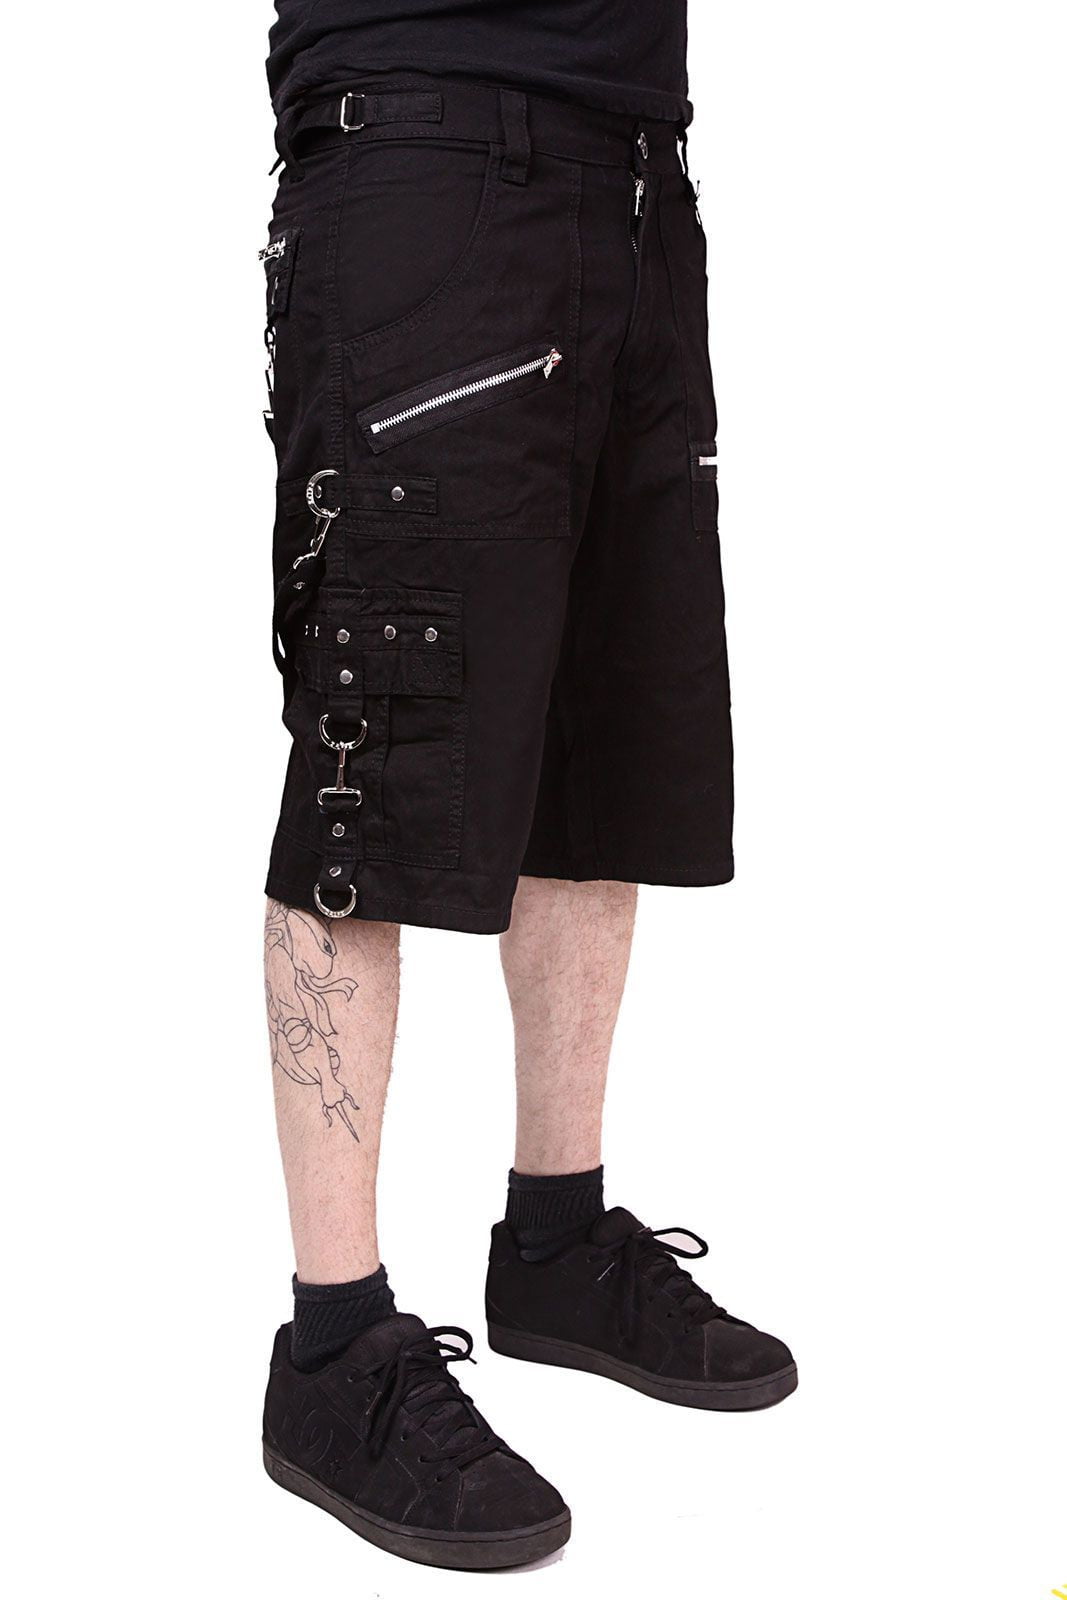 Tripp Punk Shorts - Black - Vampirefreaks Store